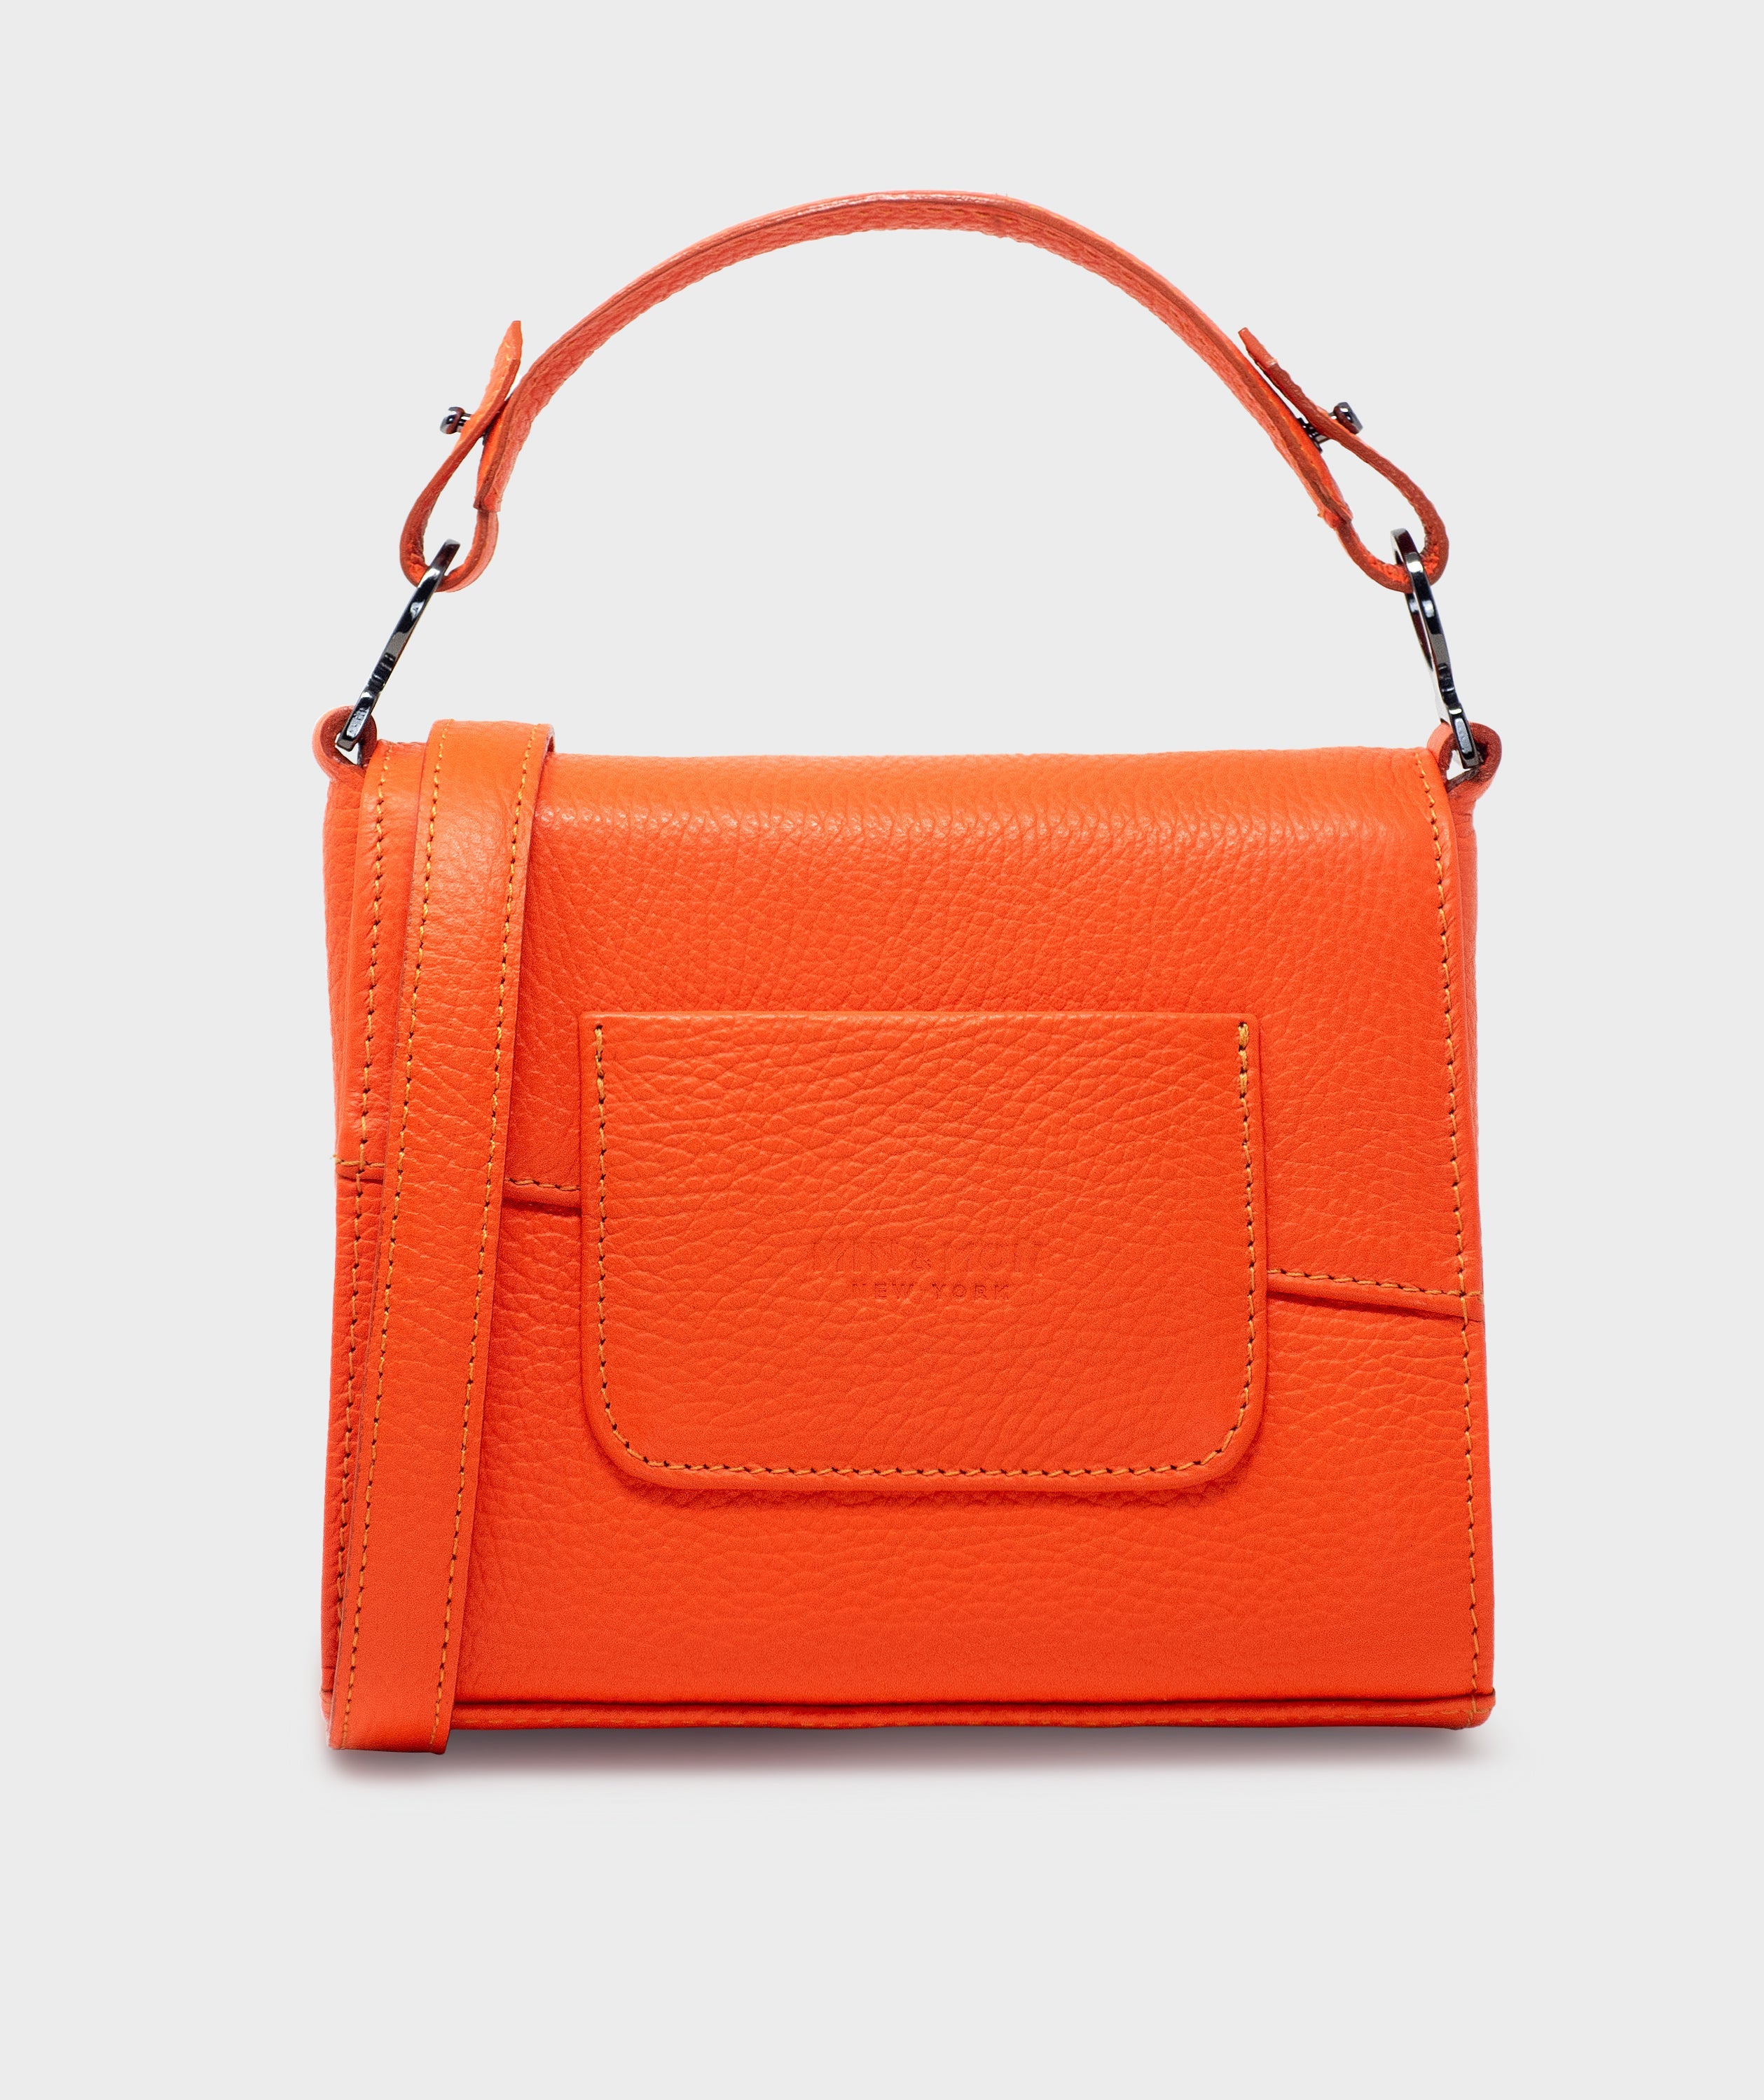 Anastasio Micro Crossbody Handbag Neon Orange Leather - Eyes Embroidery - Back view